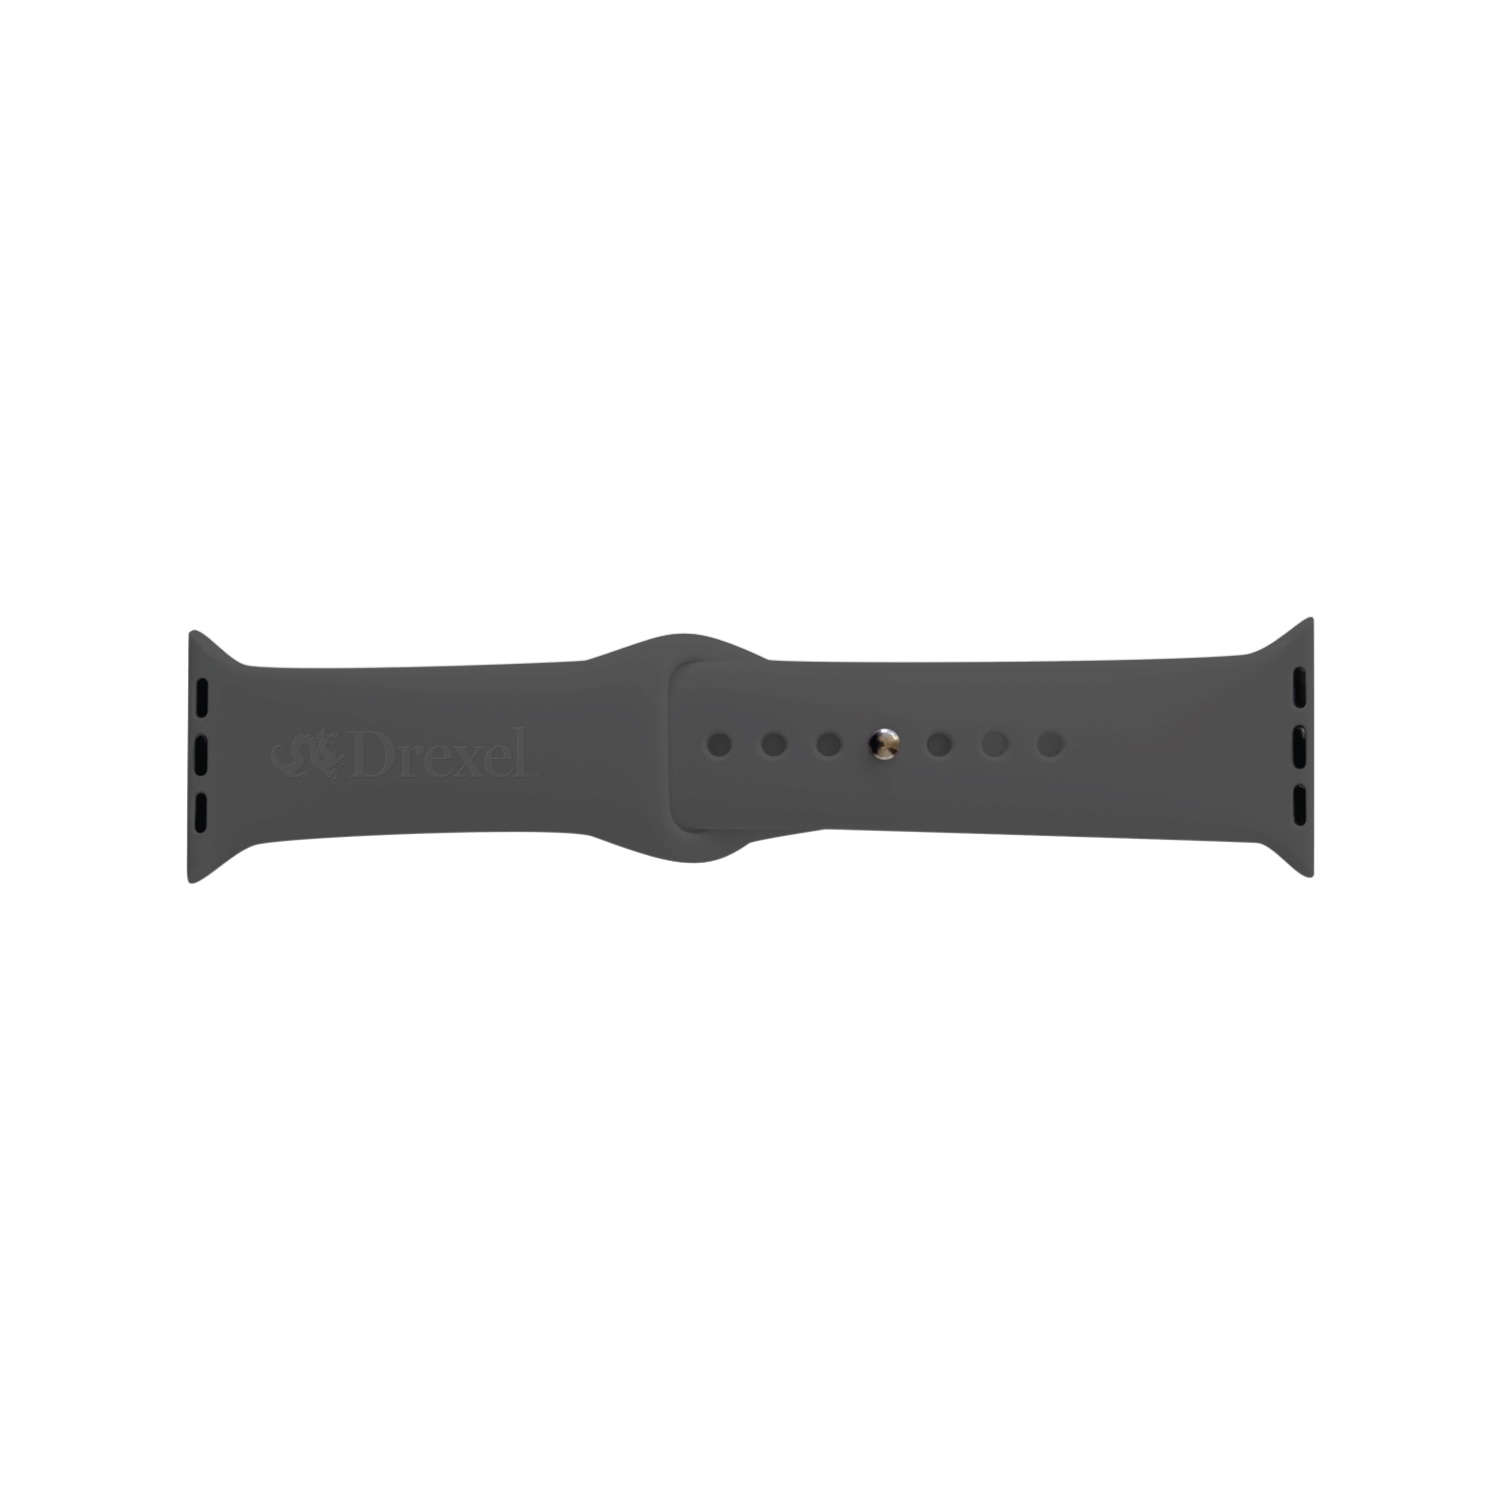 Drexel University V2 - Apple Watch Wrist Band, 38/40mm, Charcoal Matte, Classic V1